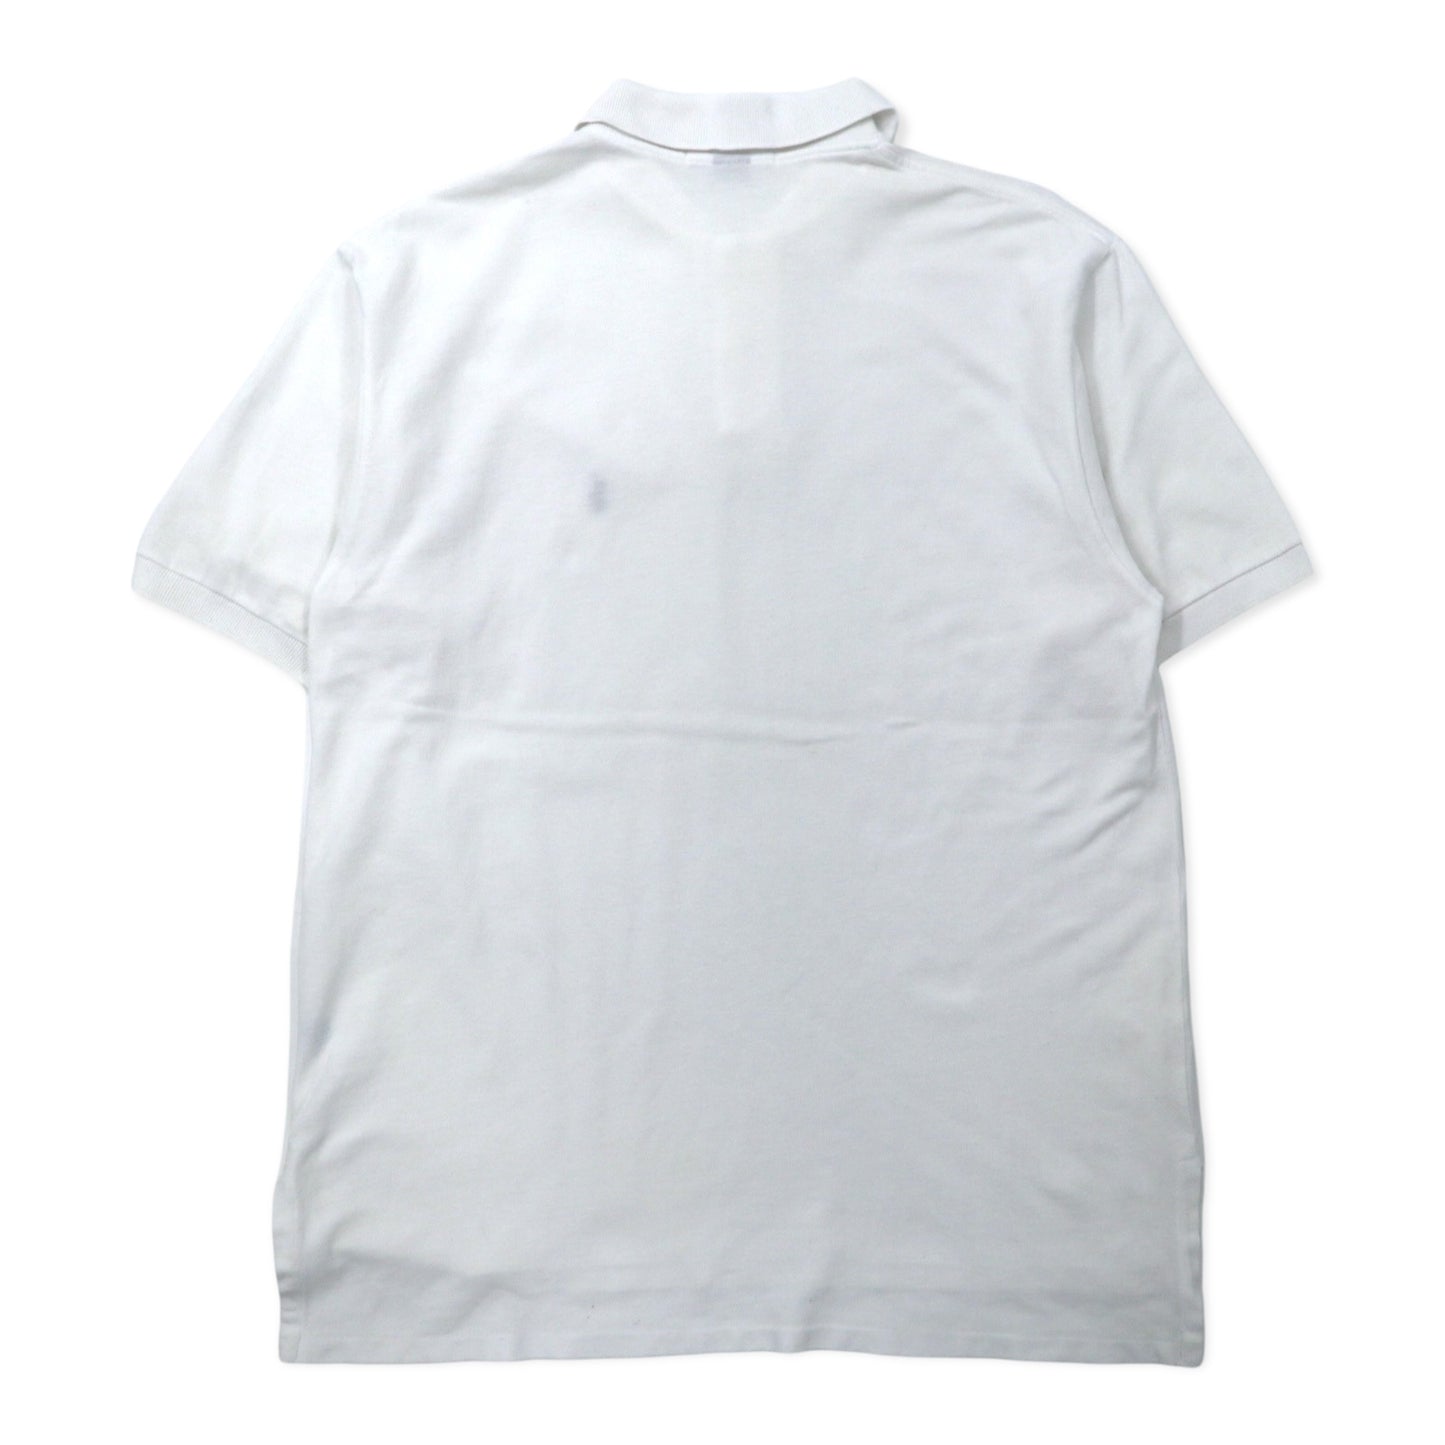 Polo by Ralph Lauren USA製 ポロシャツ L ホワイト コットン 鹿の子 スモールポニー刺繍